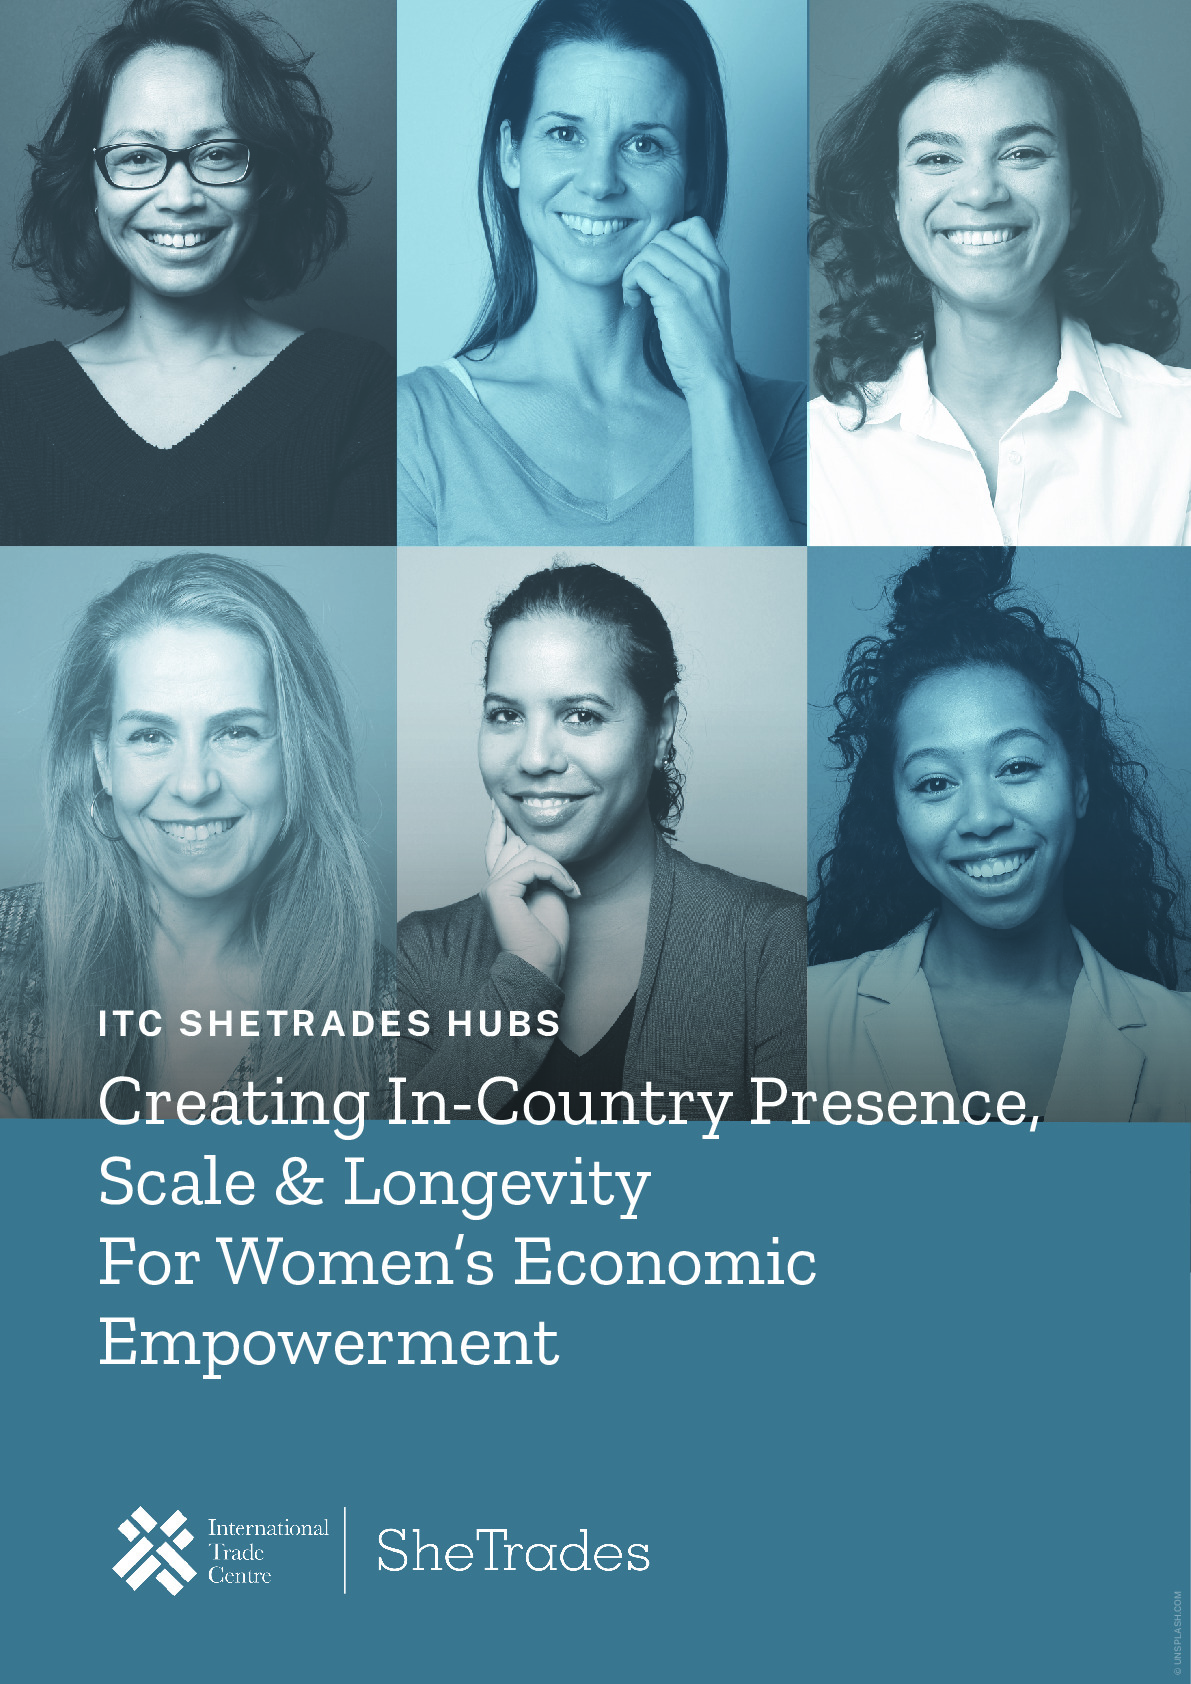 shetrades_hubs_womens_economic_empowerment_brochure_08_apr_digital